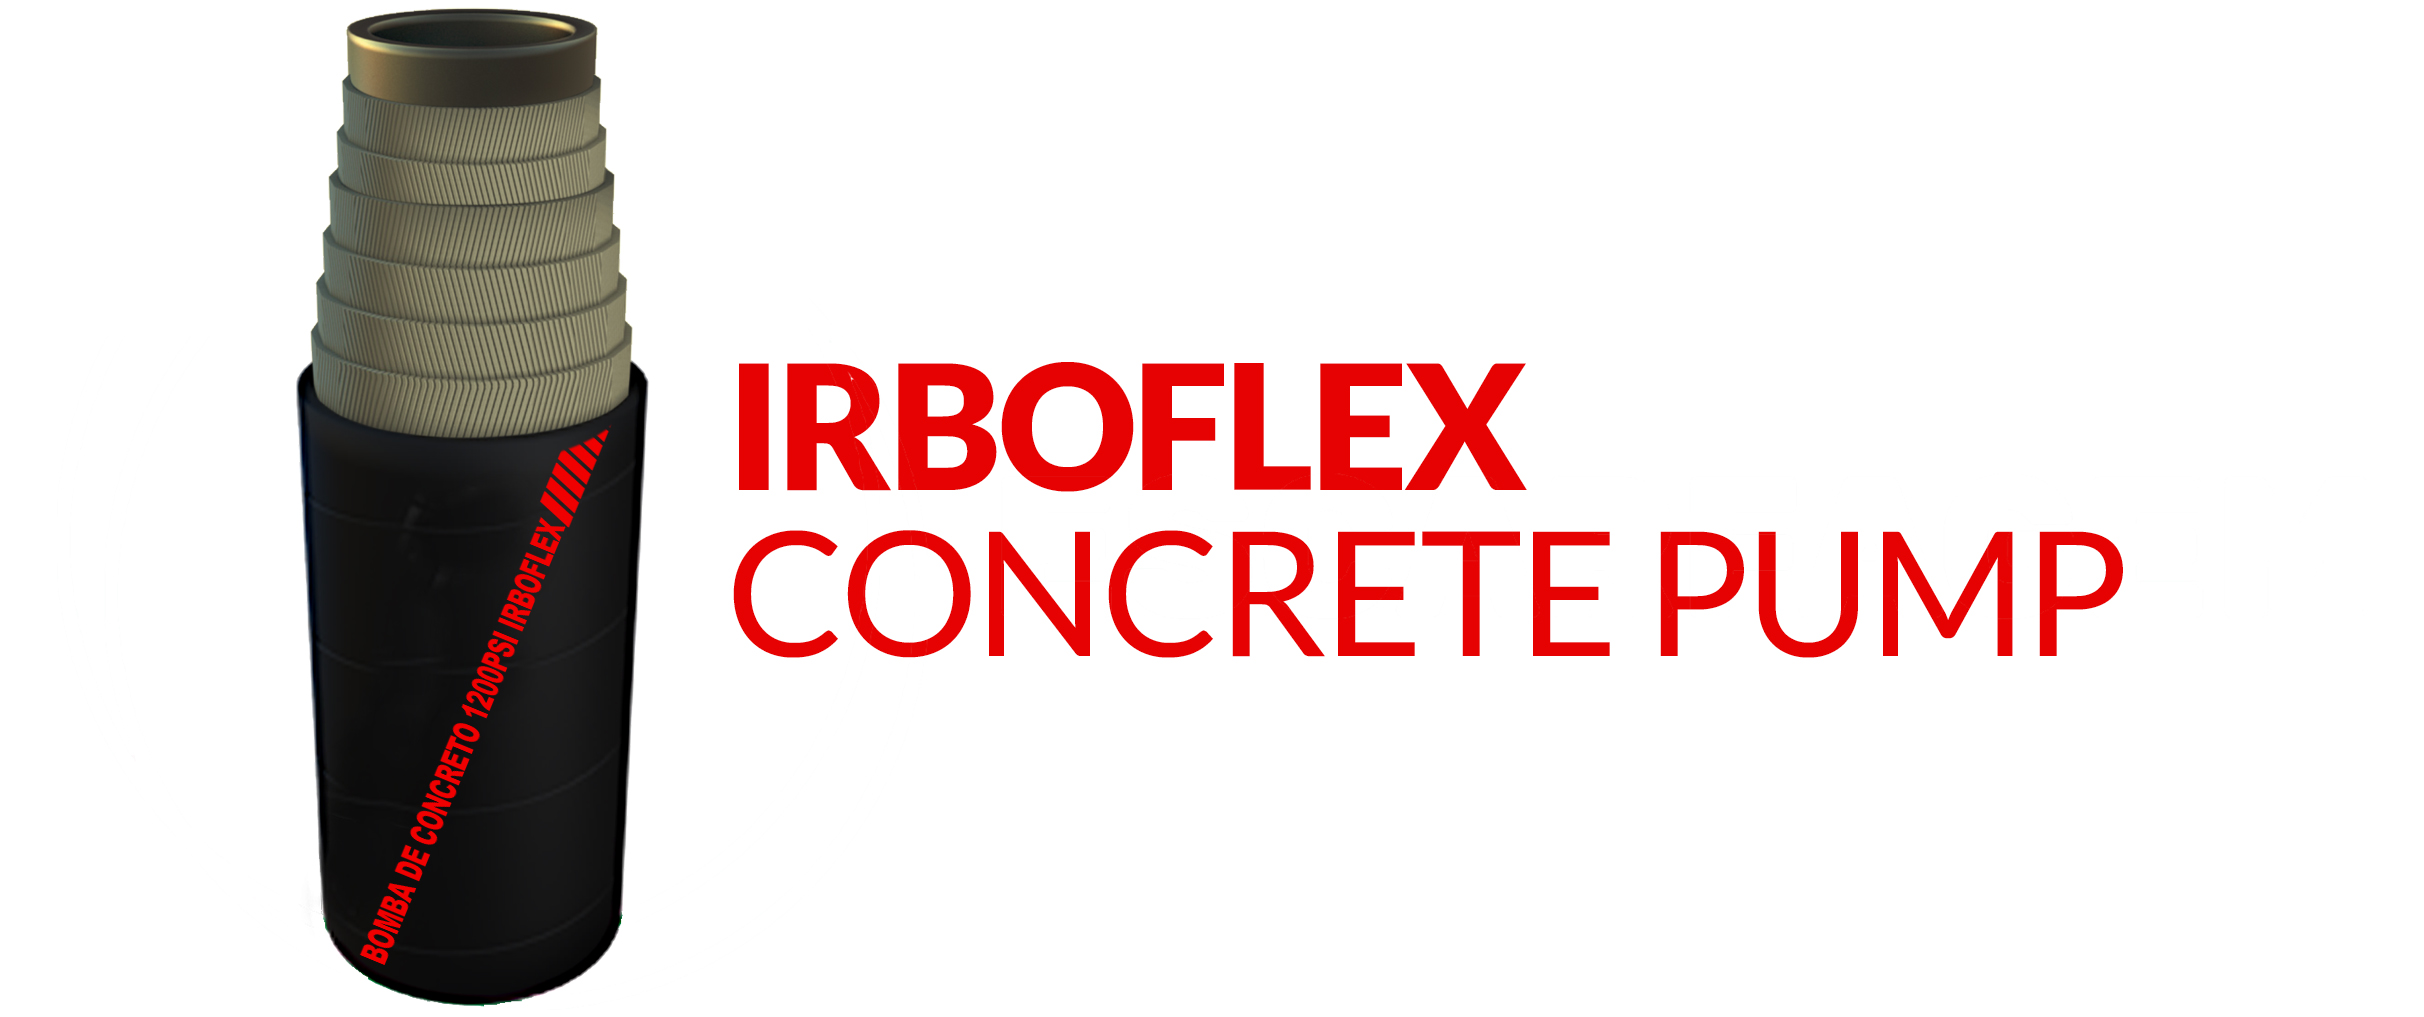 bomba-de-concreto___-_irboflex-concrete-pump-copia